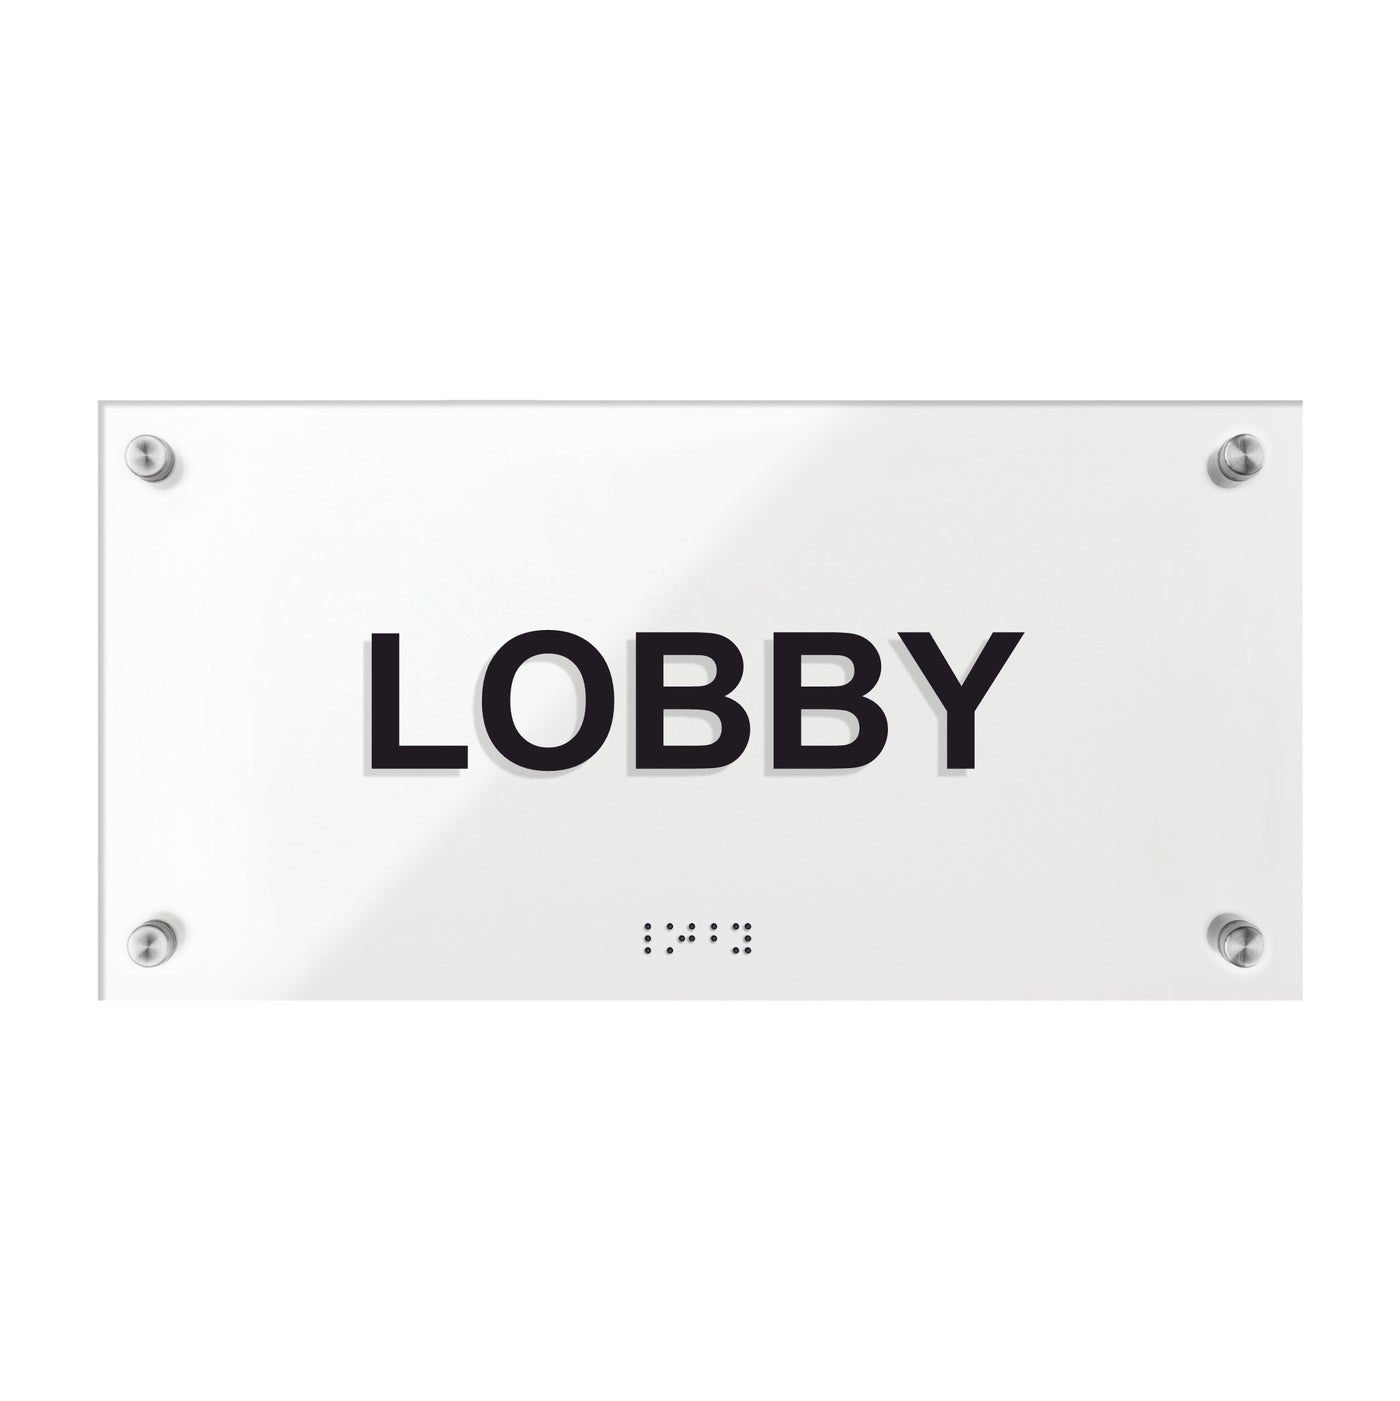 Lobby Signs - Acrylic Door Plate "Classic" Design